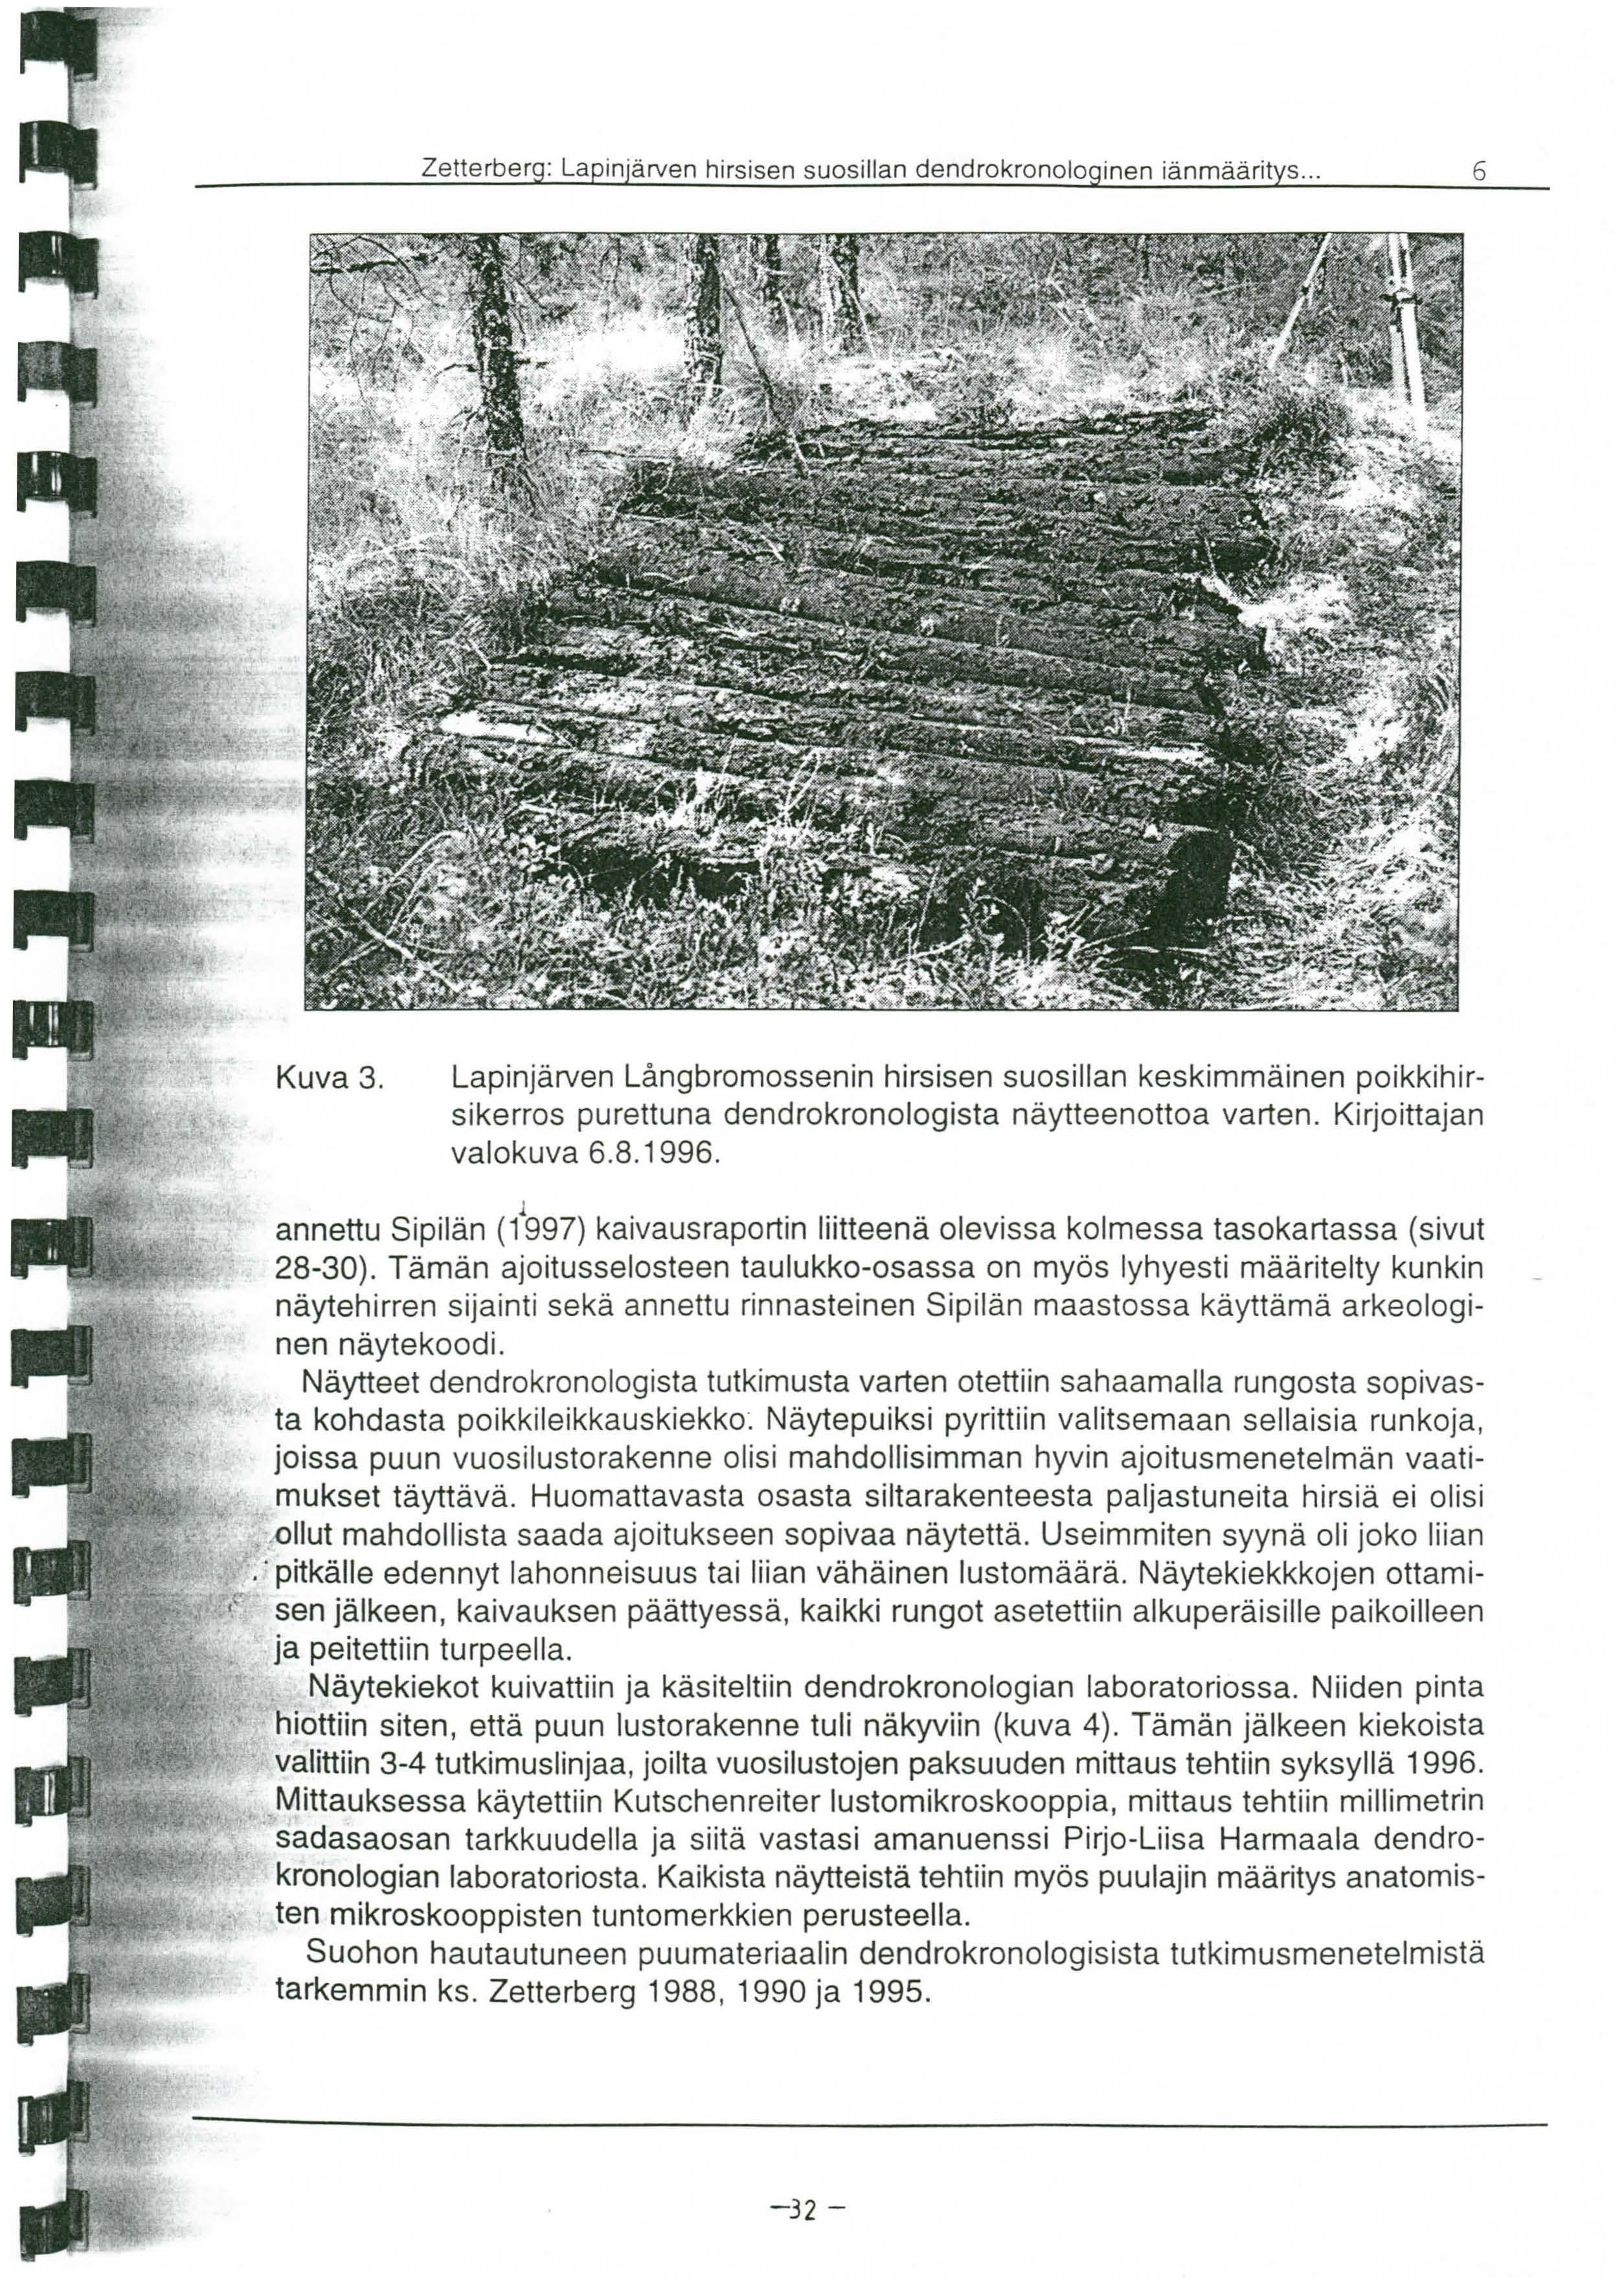 Langbromosan tutkimus-page-033